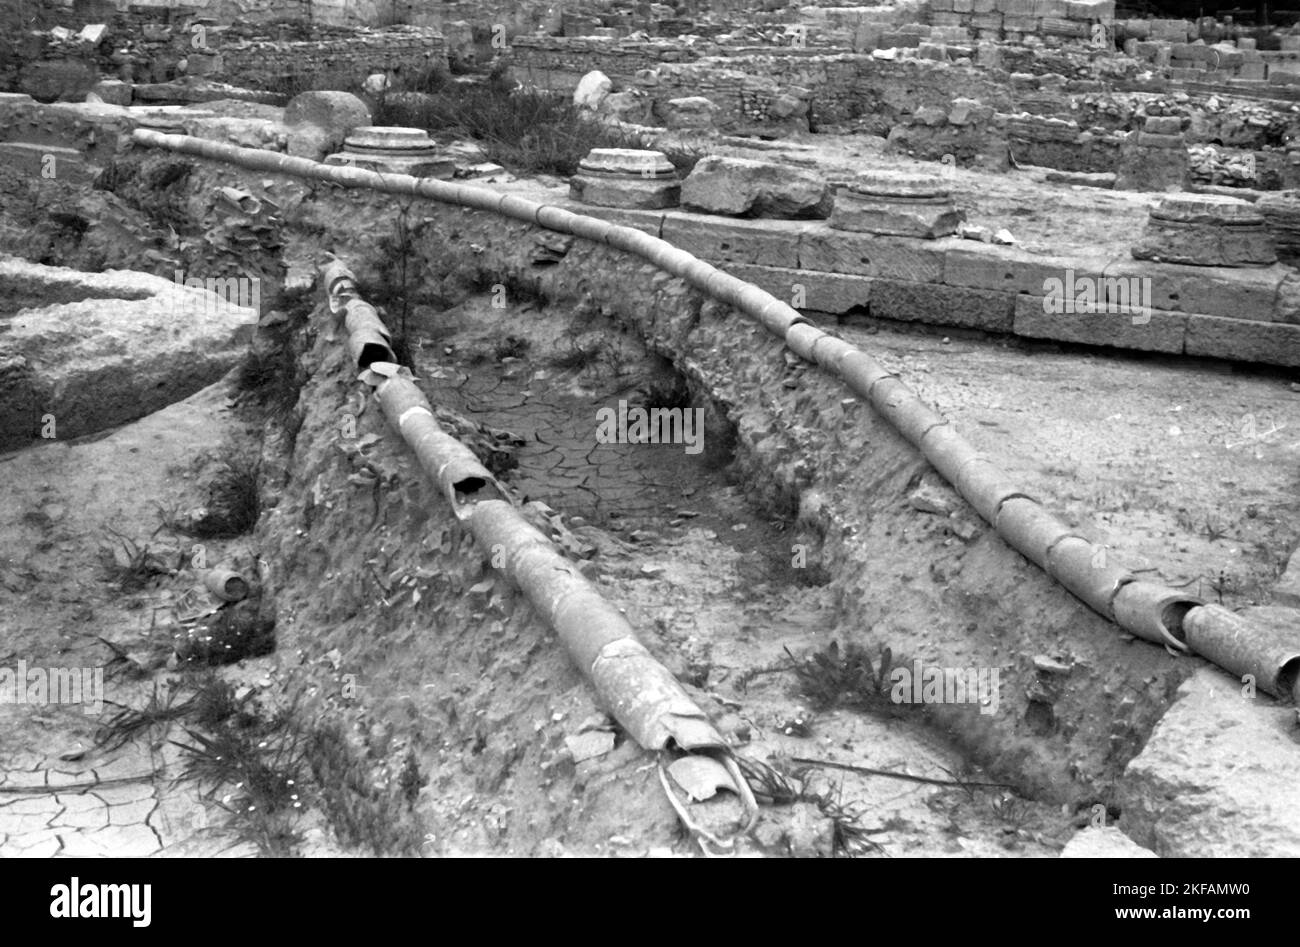 Überreste eines ausgetrockneten Kanals im Ruinenfeld von Olympia, Griechenland, 1950er Jahre. Remains of a dried out canal in the ancient city of Olympia, Greece, 1950s. Stock Photo